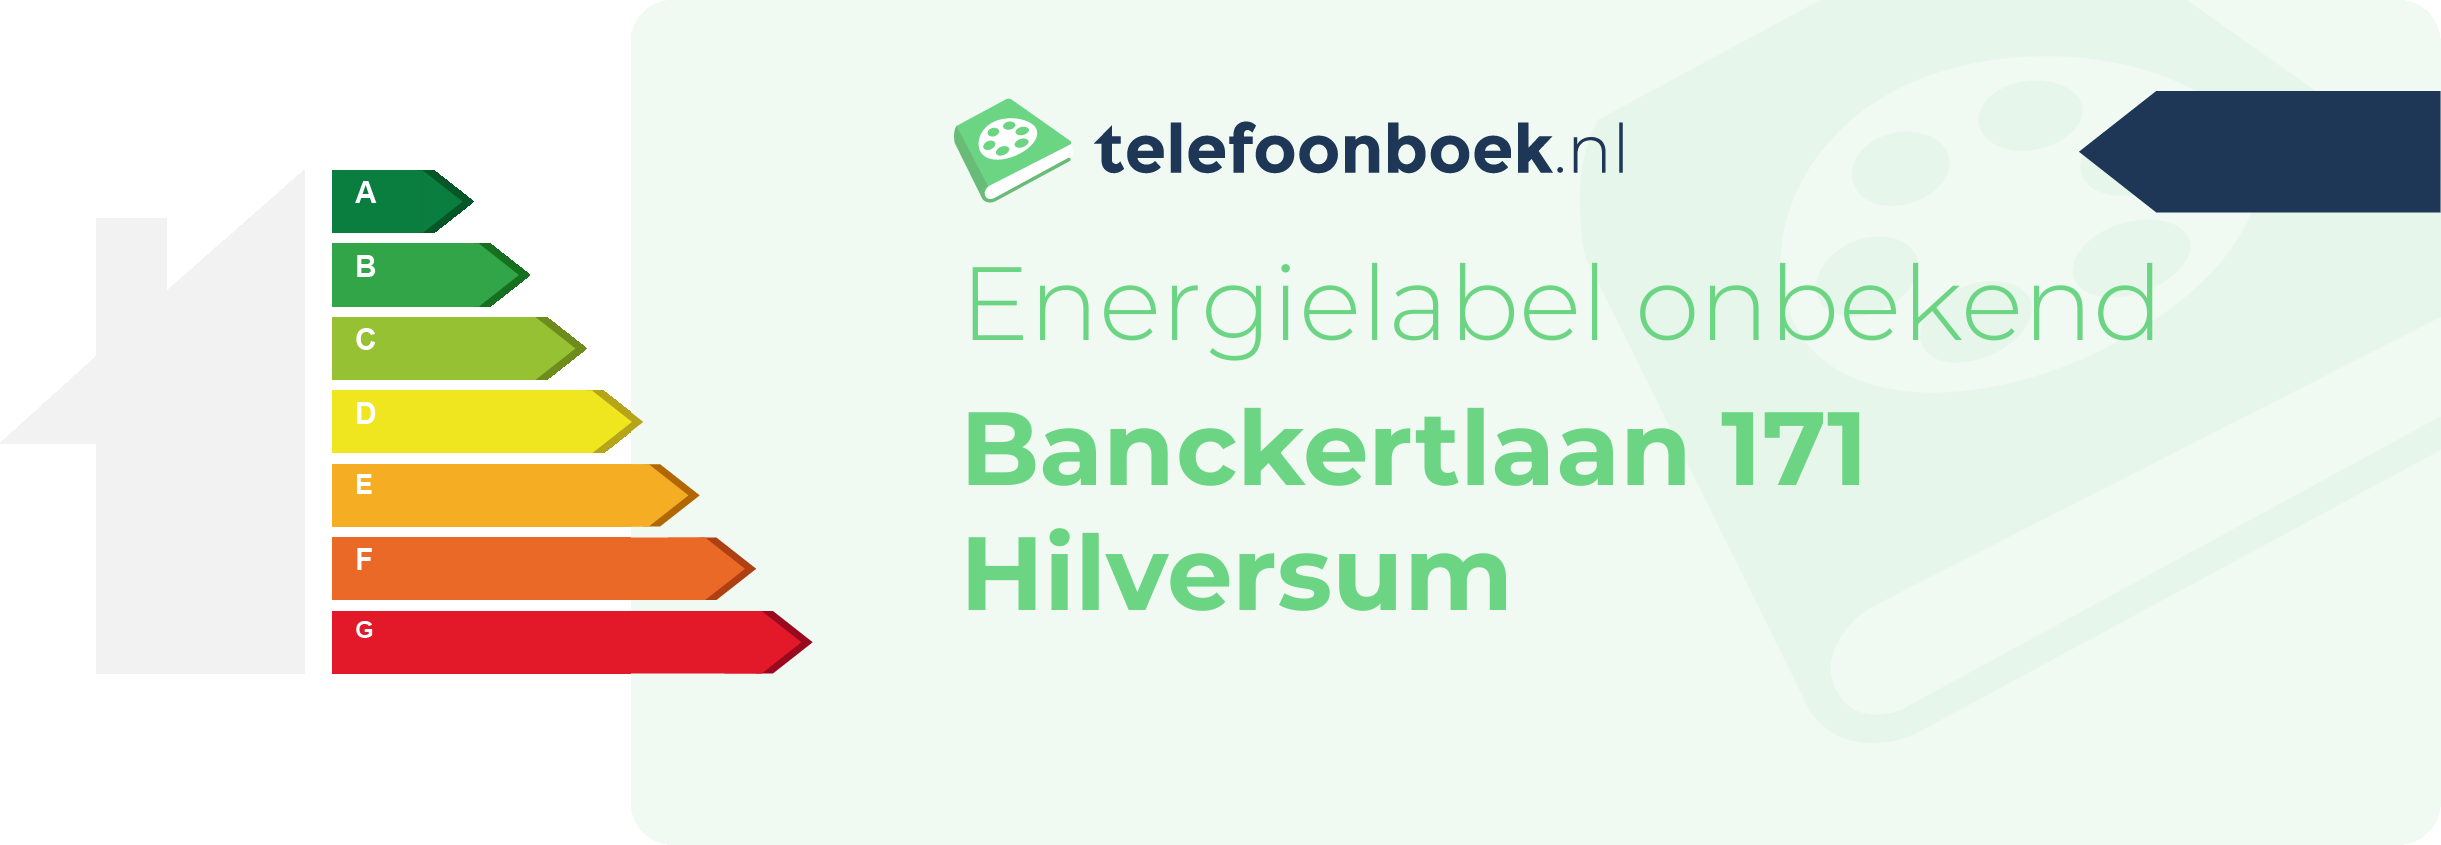 Energielabel Banckertlaan 171 Hilversum